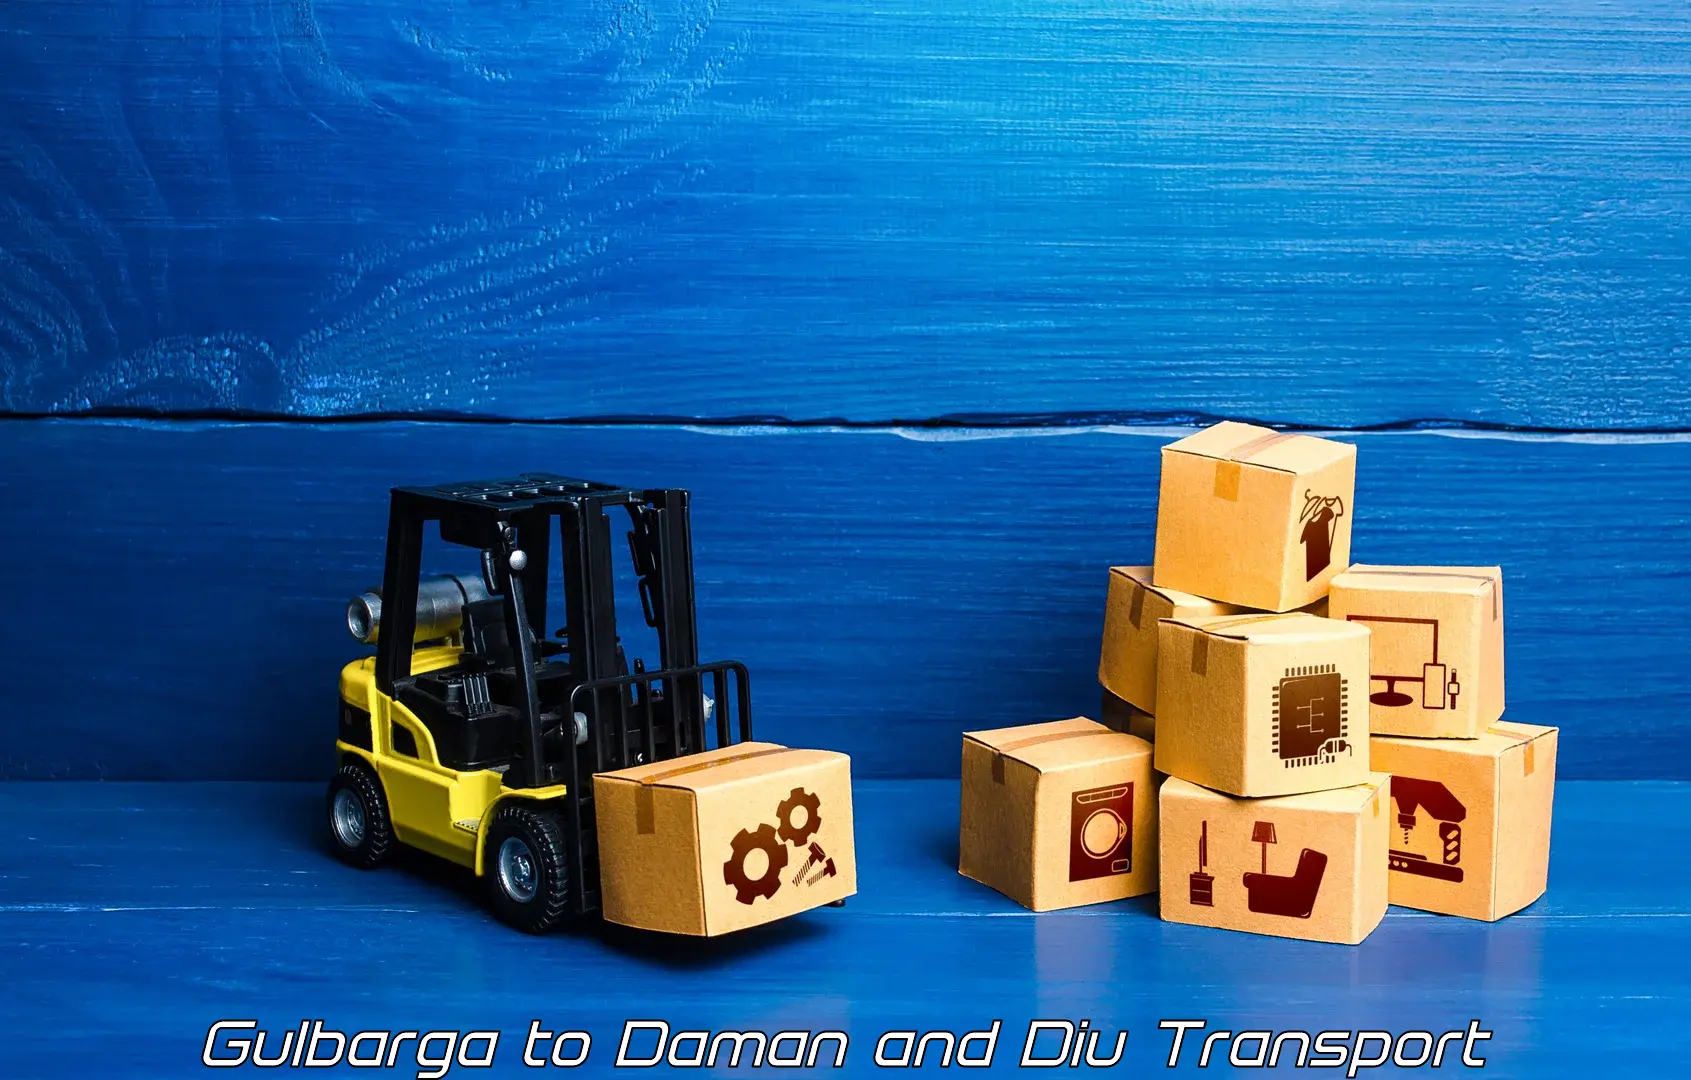 Shipping partner Gulbarga to Daman and Diu